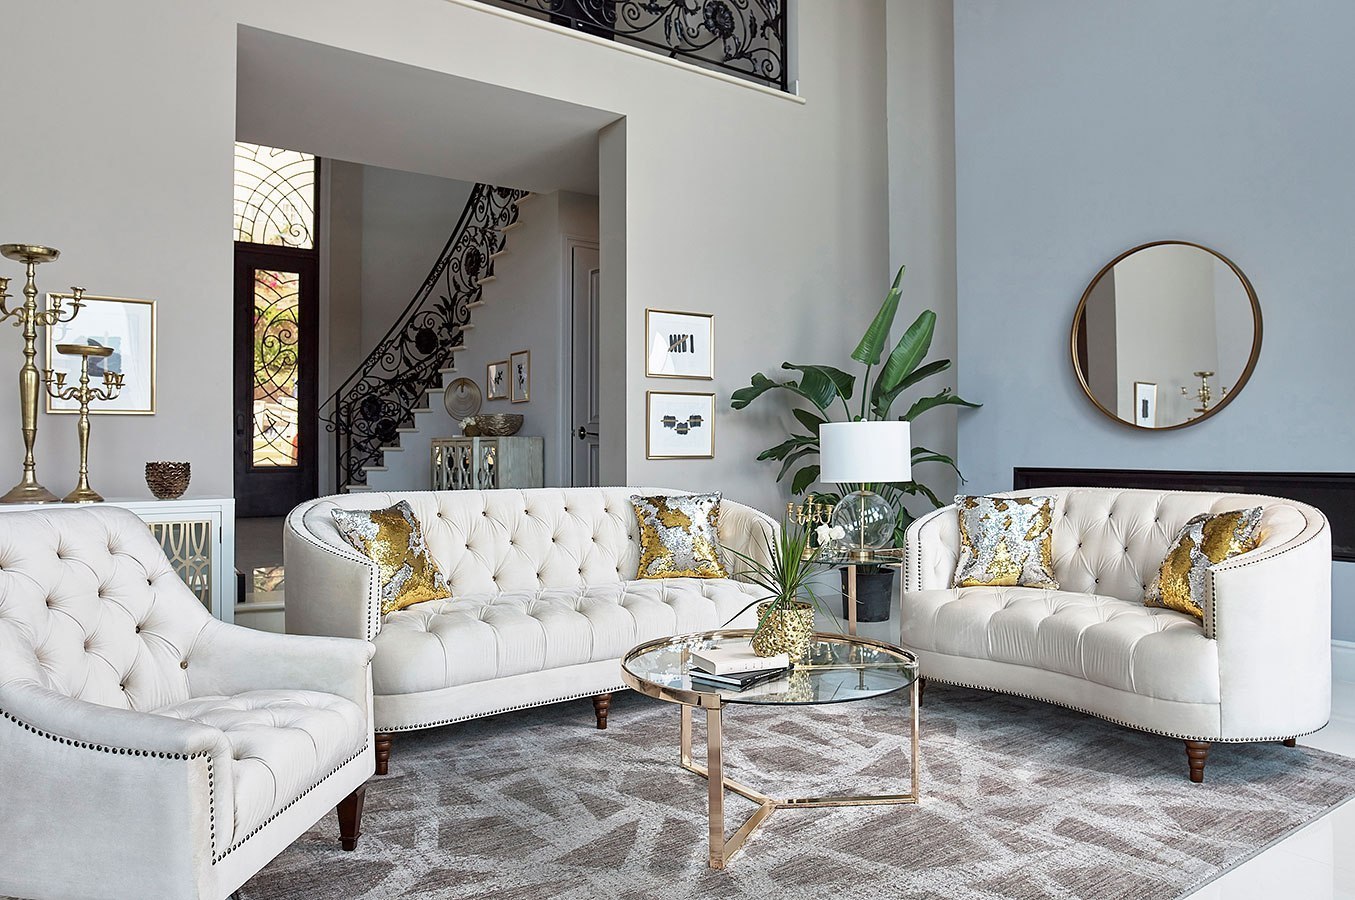 all-white living room furniture